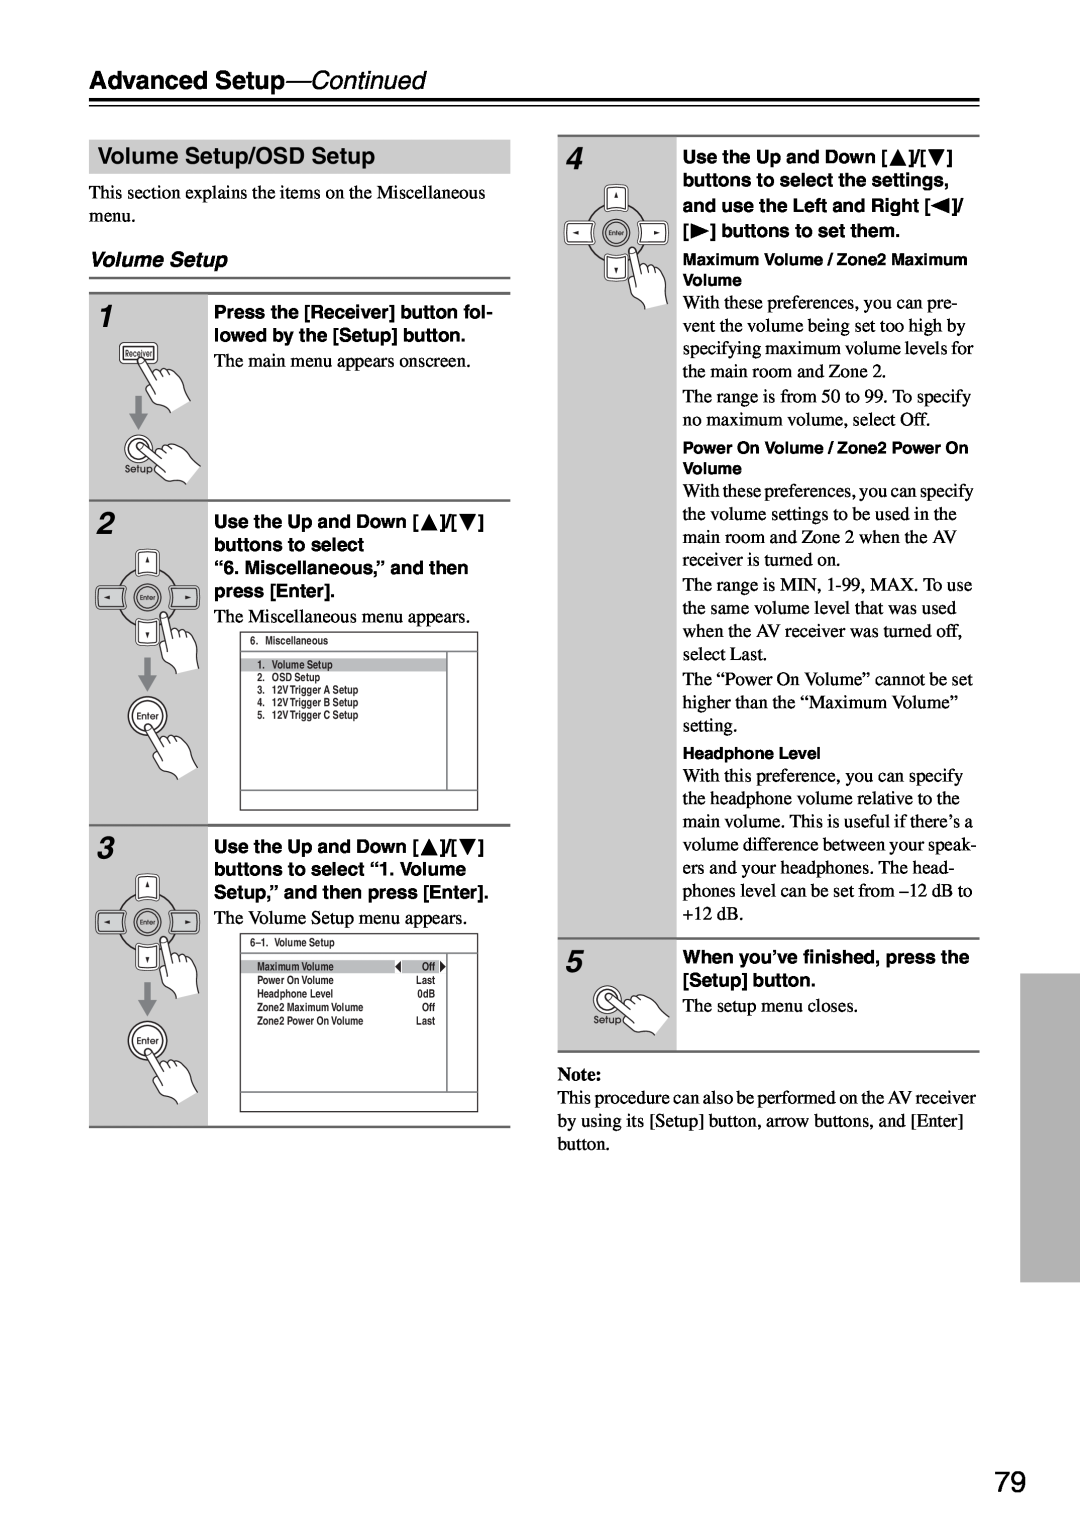 Integra DTR-5.8 instruction manual Volume Setup/OSD Setup, The Volume Setup menu appears, Advanced Setup—Continued 